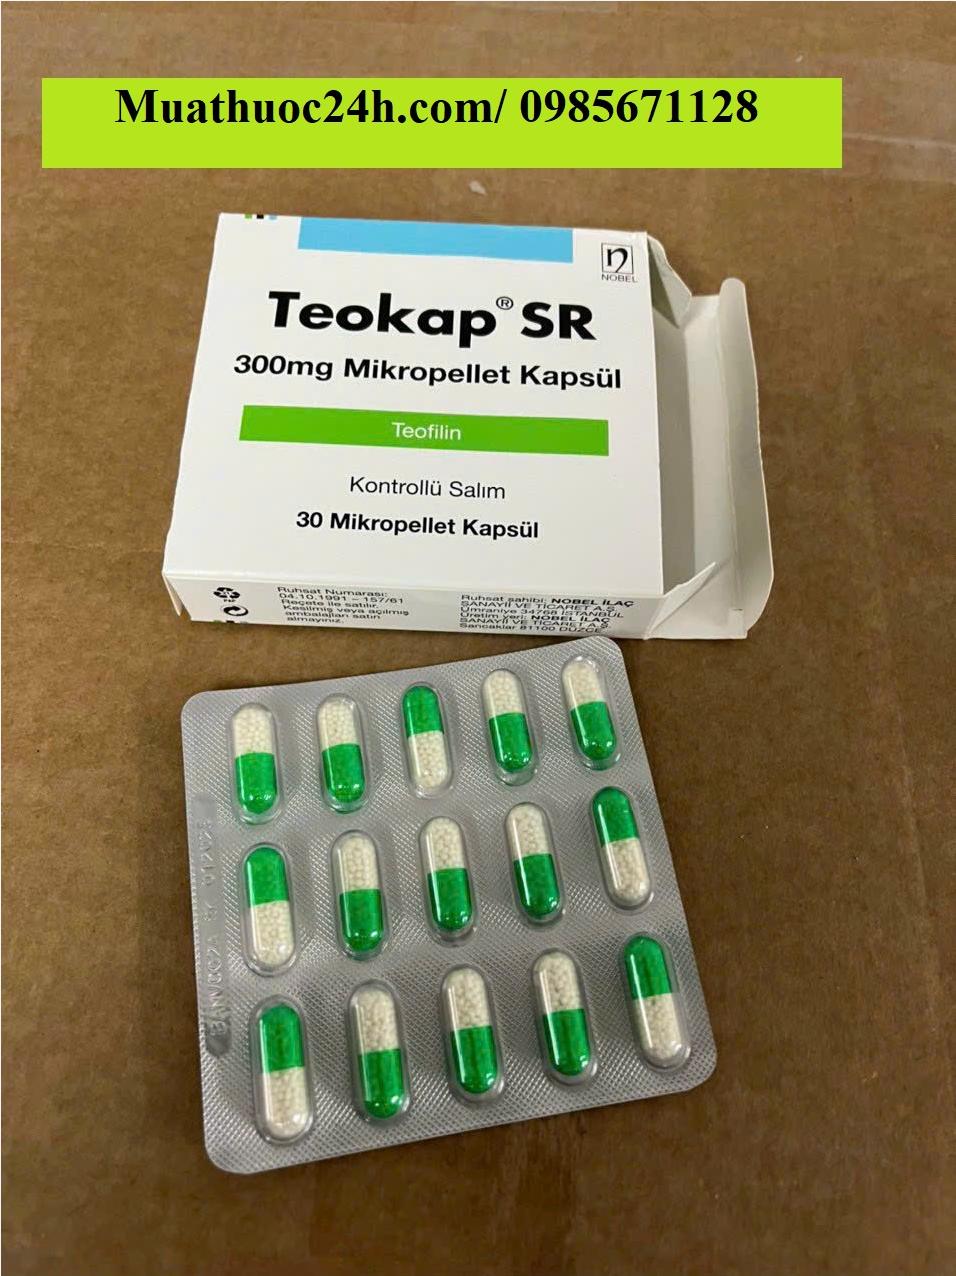 Thuốc Teokap SR 300mg Theophylline giá bao nhiêu mua ở đâu